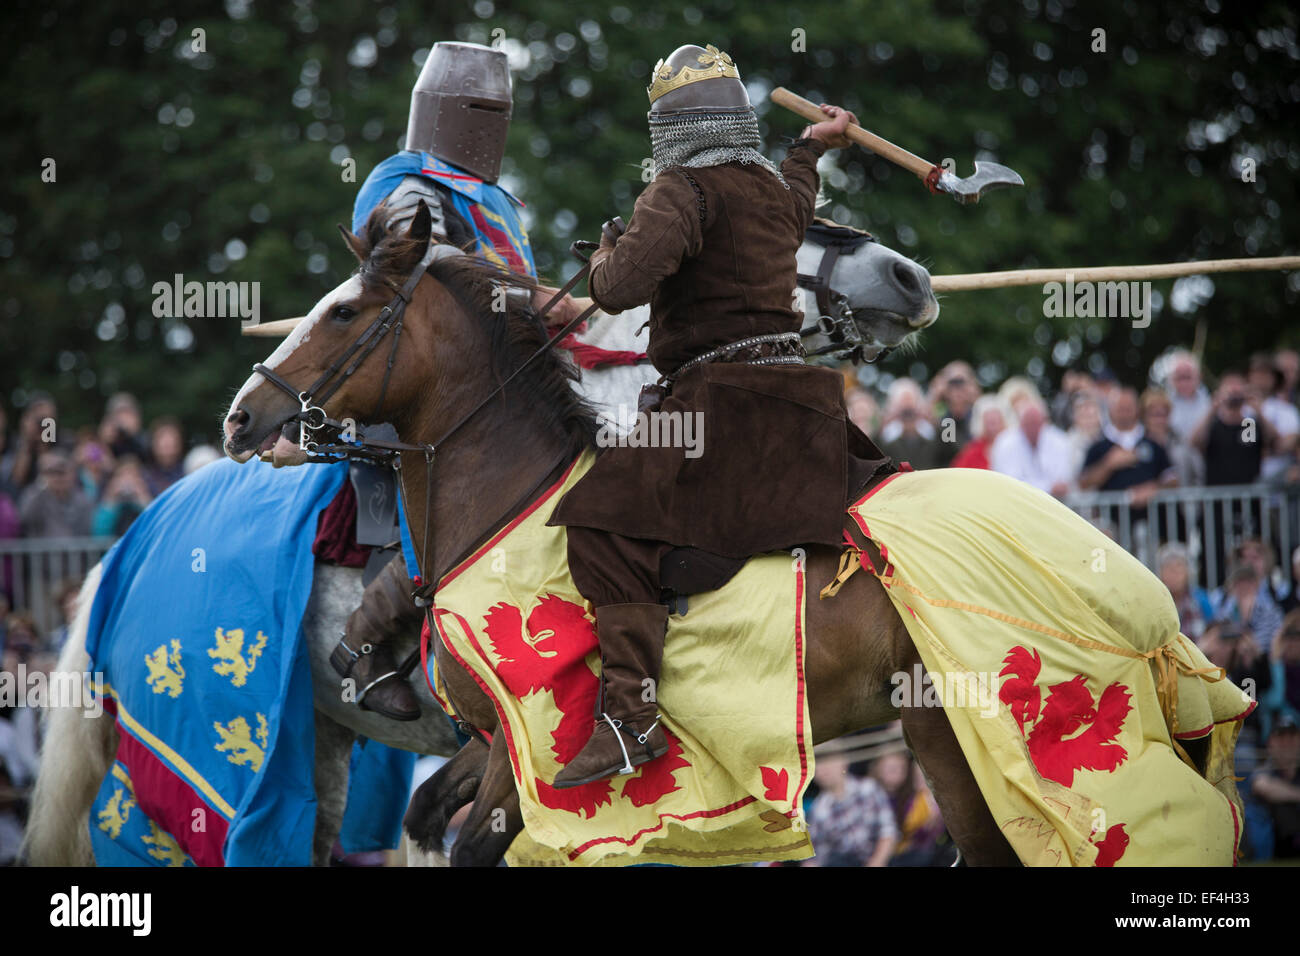 Participants dressed as Robert the Bruce taking part in a battle scene at Bannockburn Live, at Bannockburn, Stirlingshire. Stock Photo